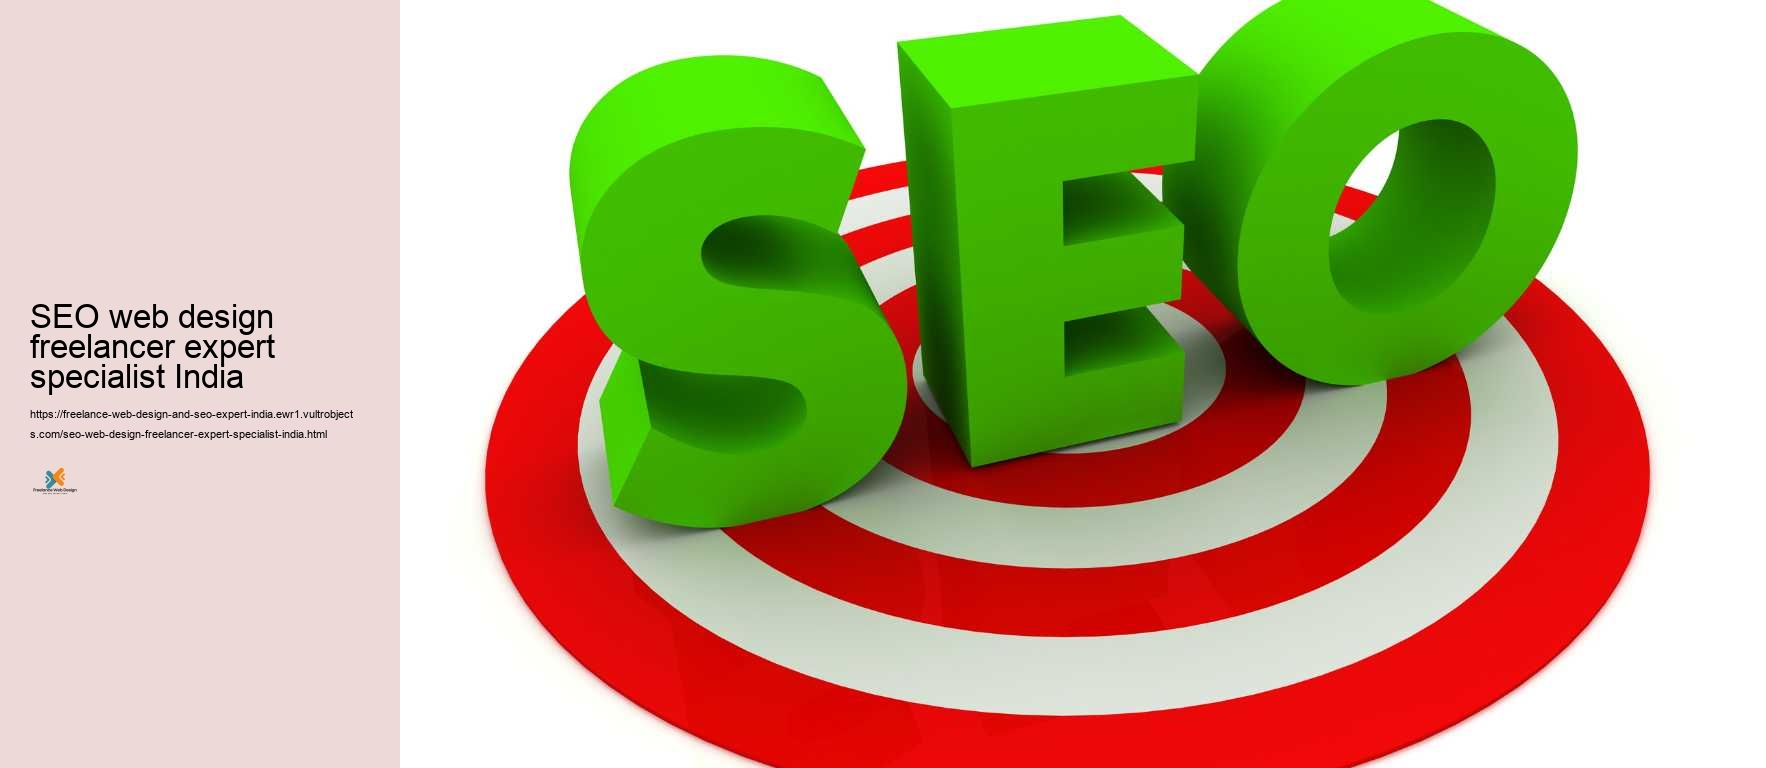 SEO web design freelancer expert specialist India